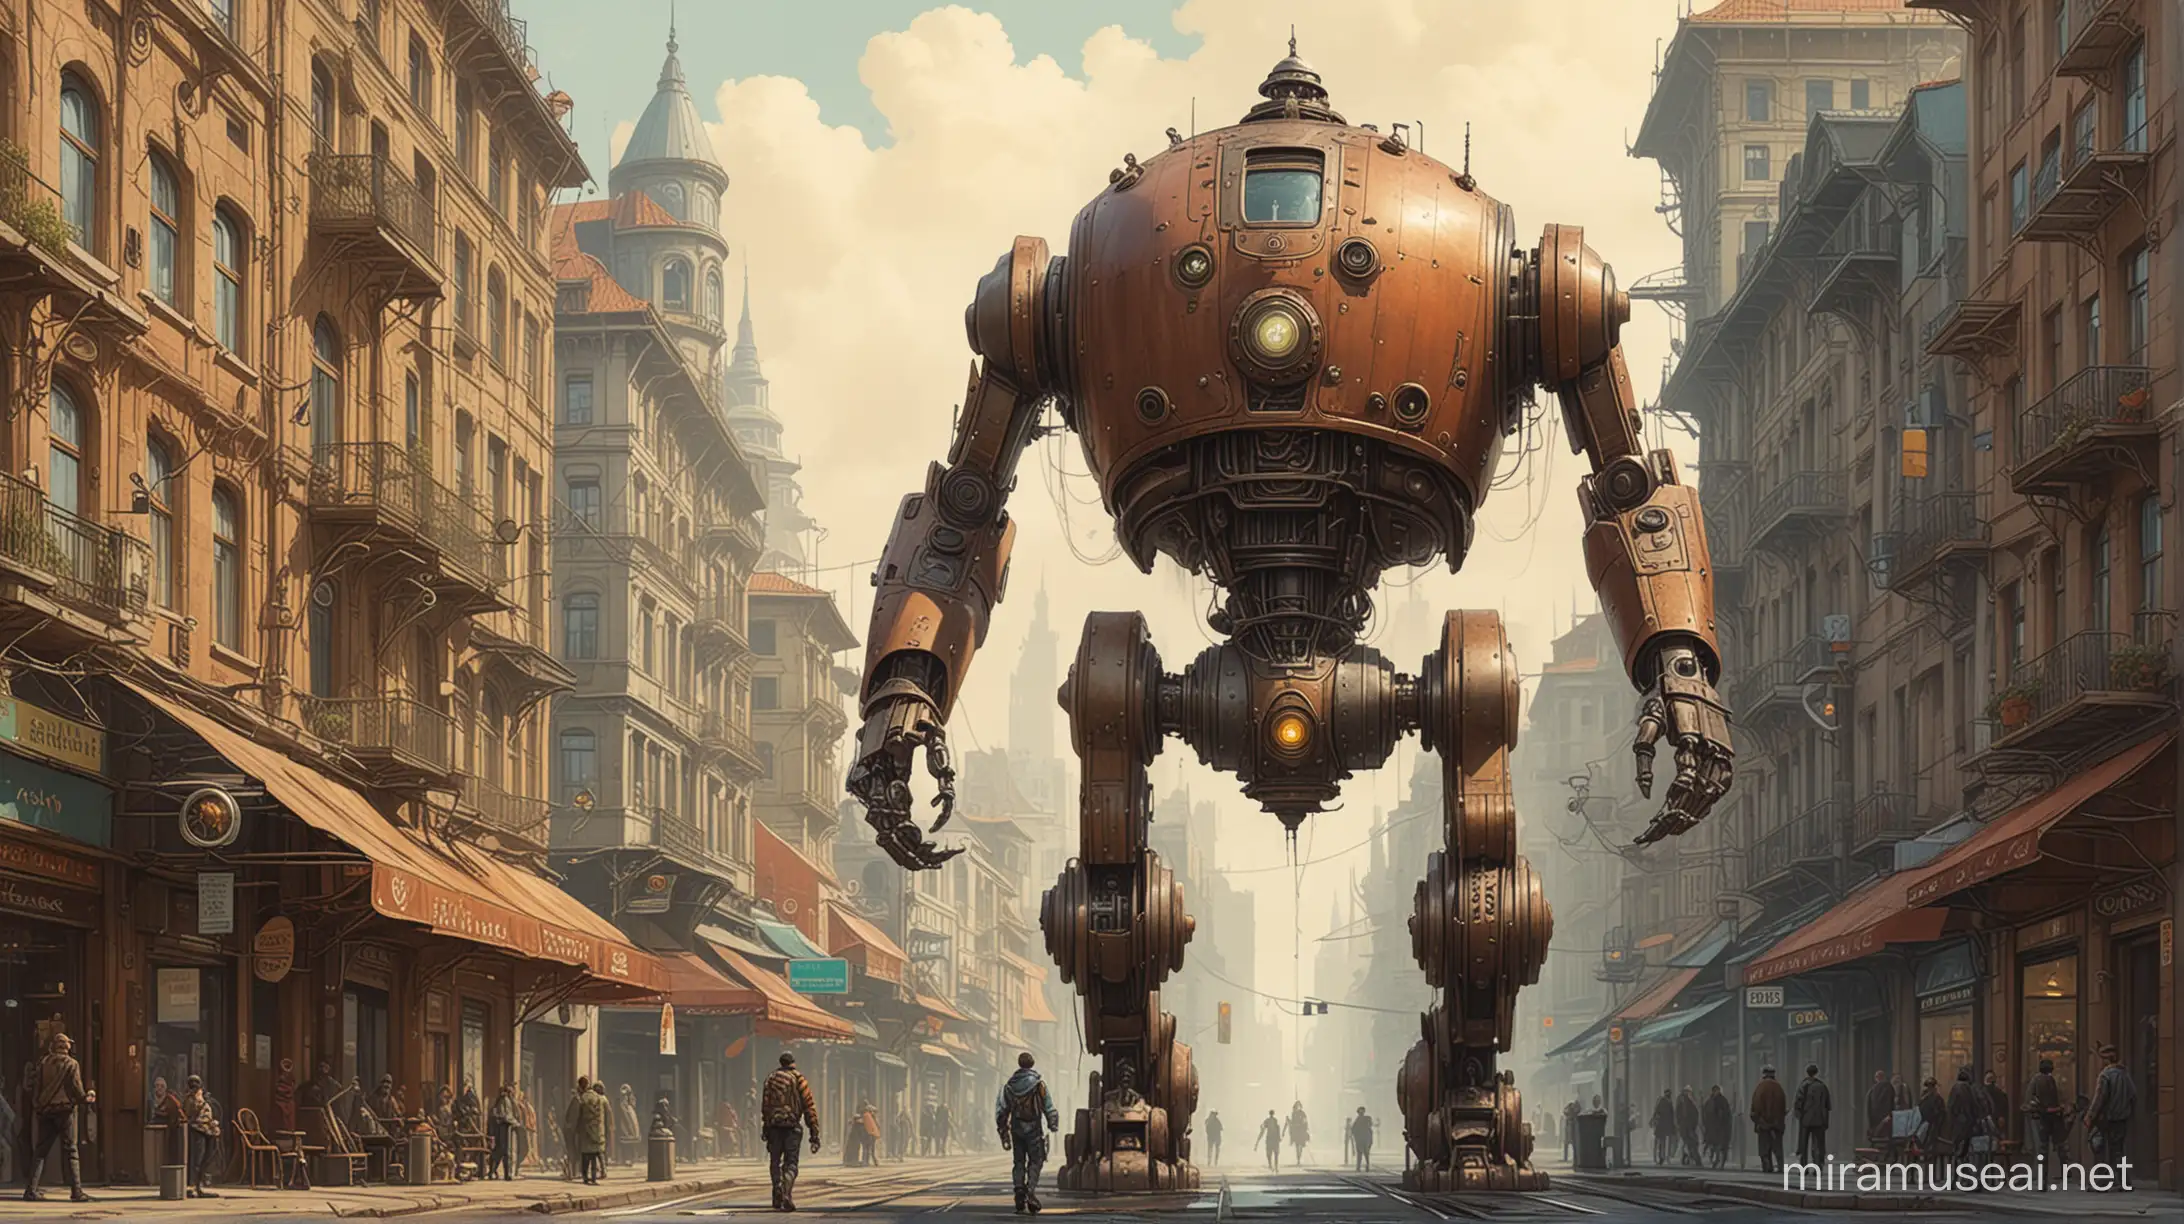 Gigantic Steampunk Robot Strolling Through RetroFuturistic Art Nouveau Cityscape